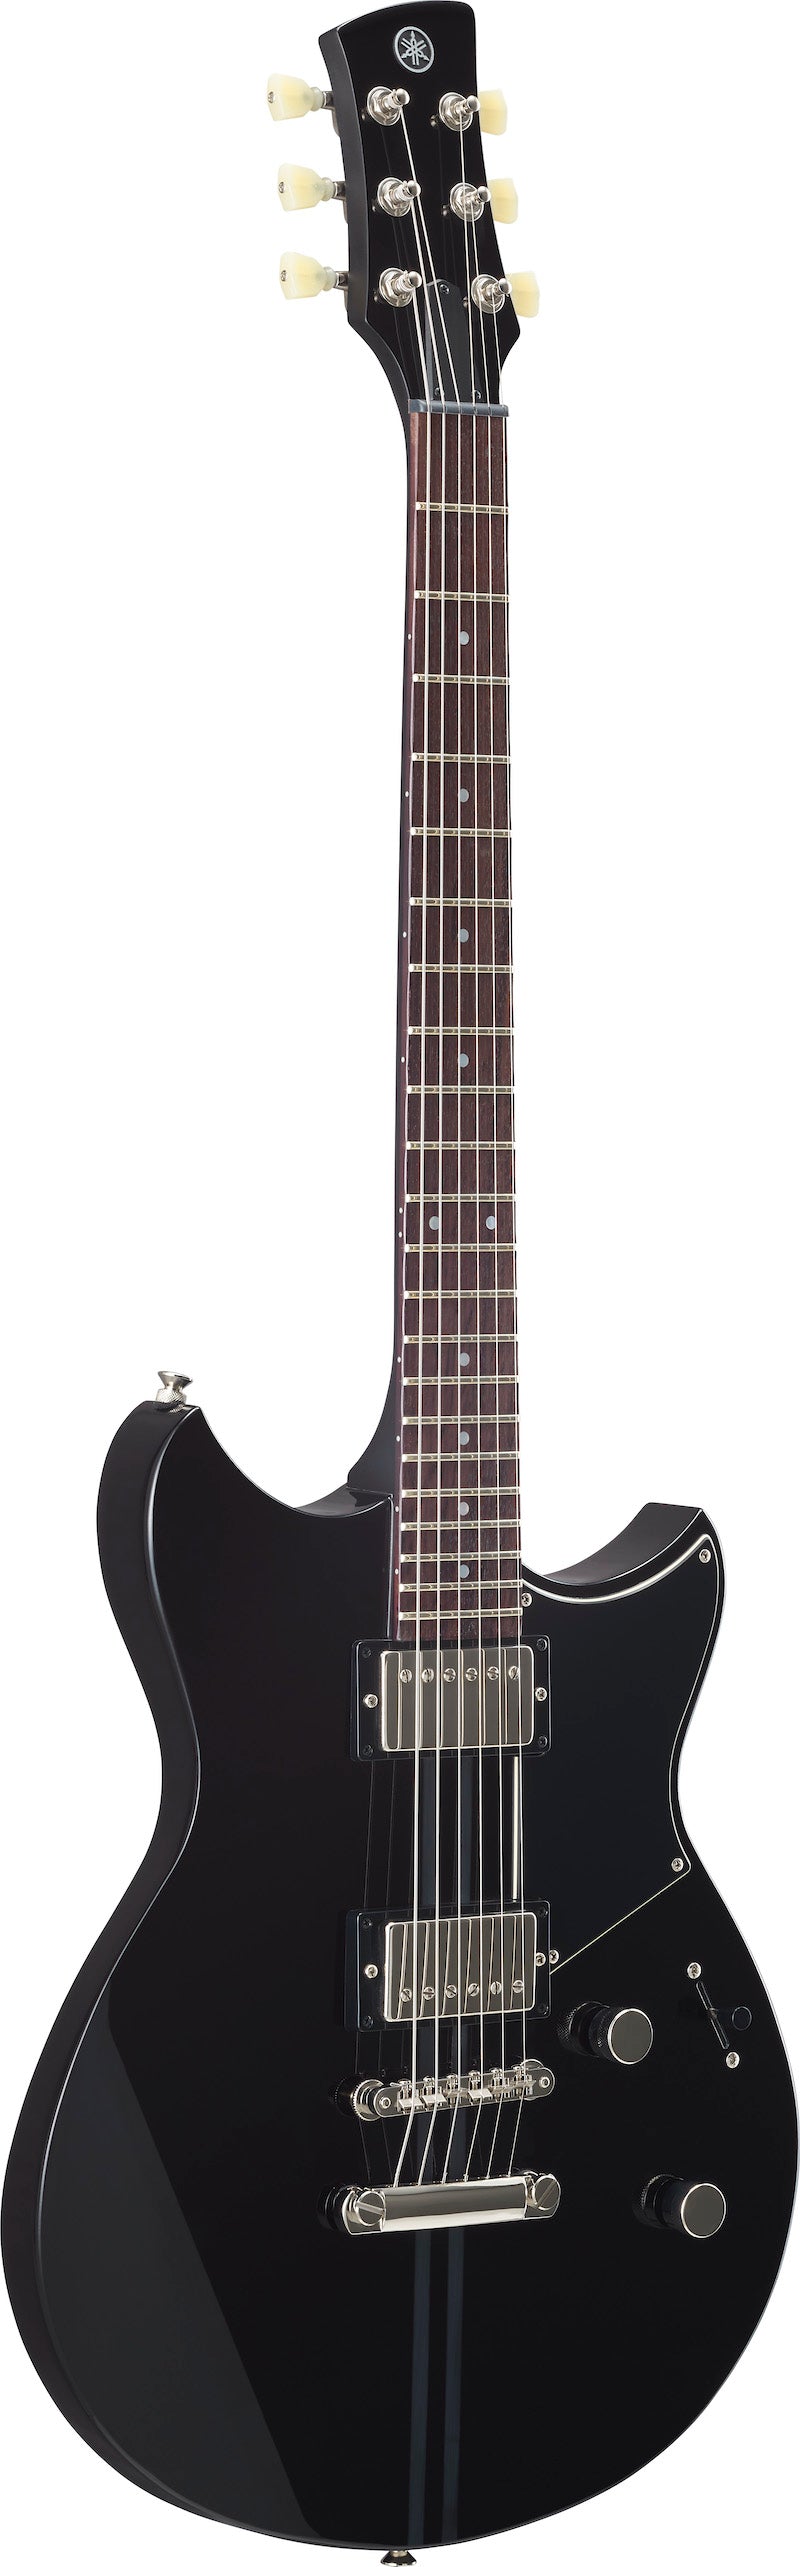 Yamaha Revstar RSE20 BL Electric Guitar - Black - A Pratte Guitars